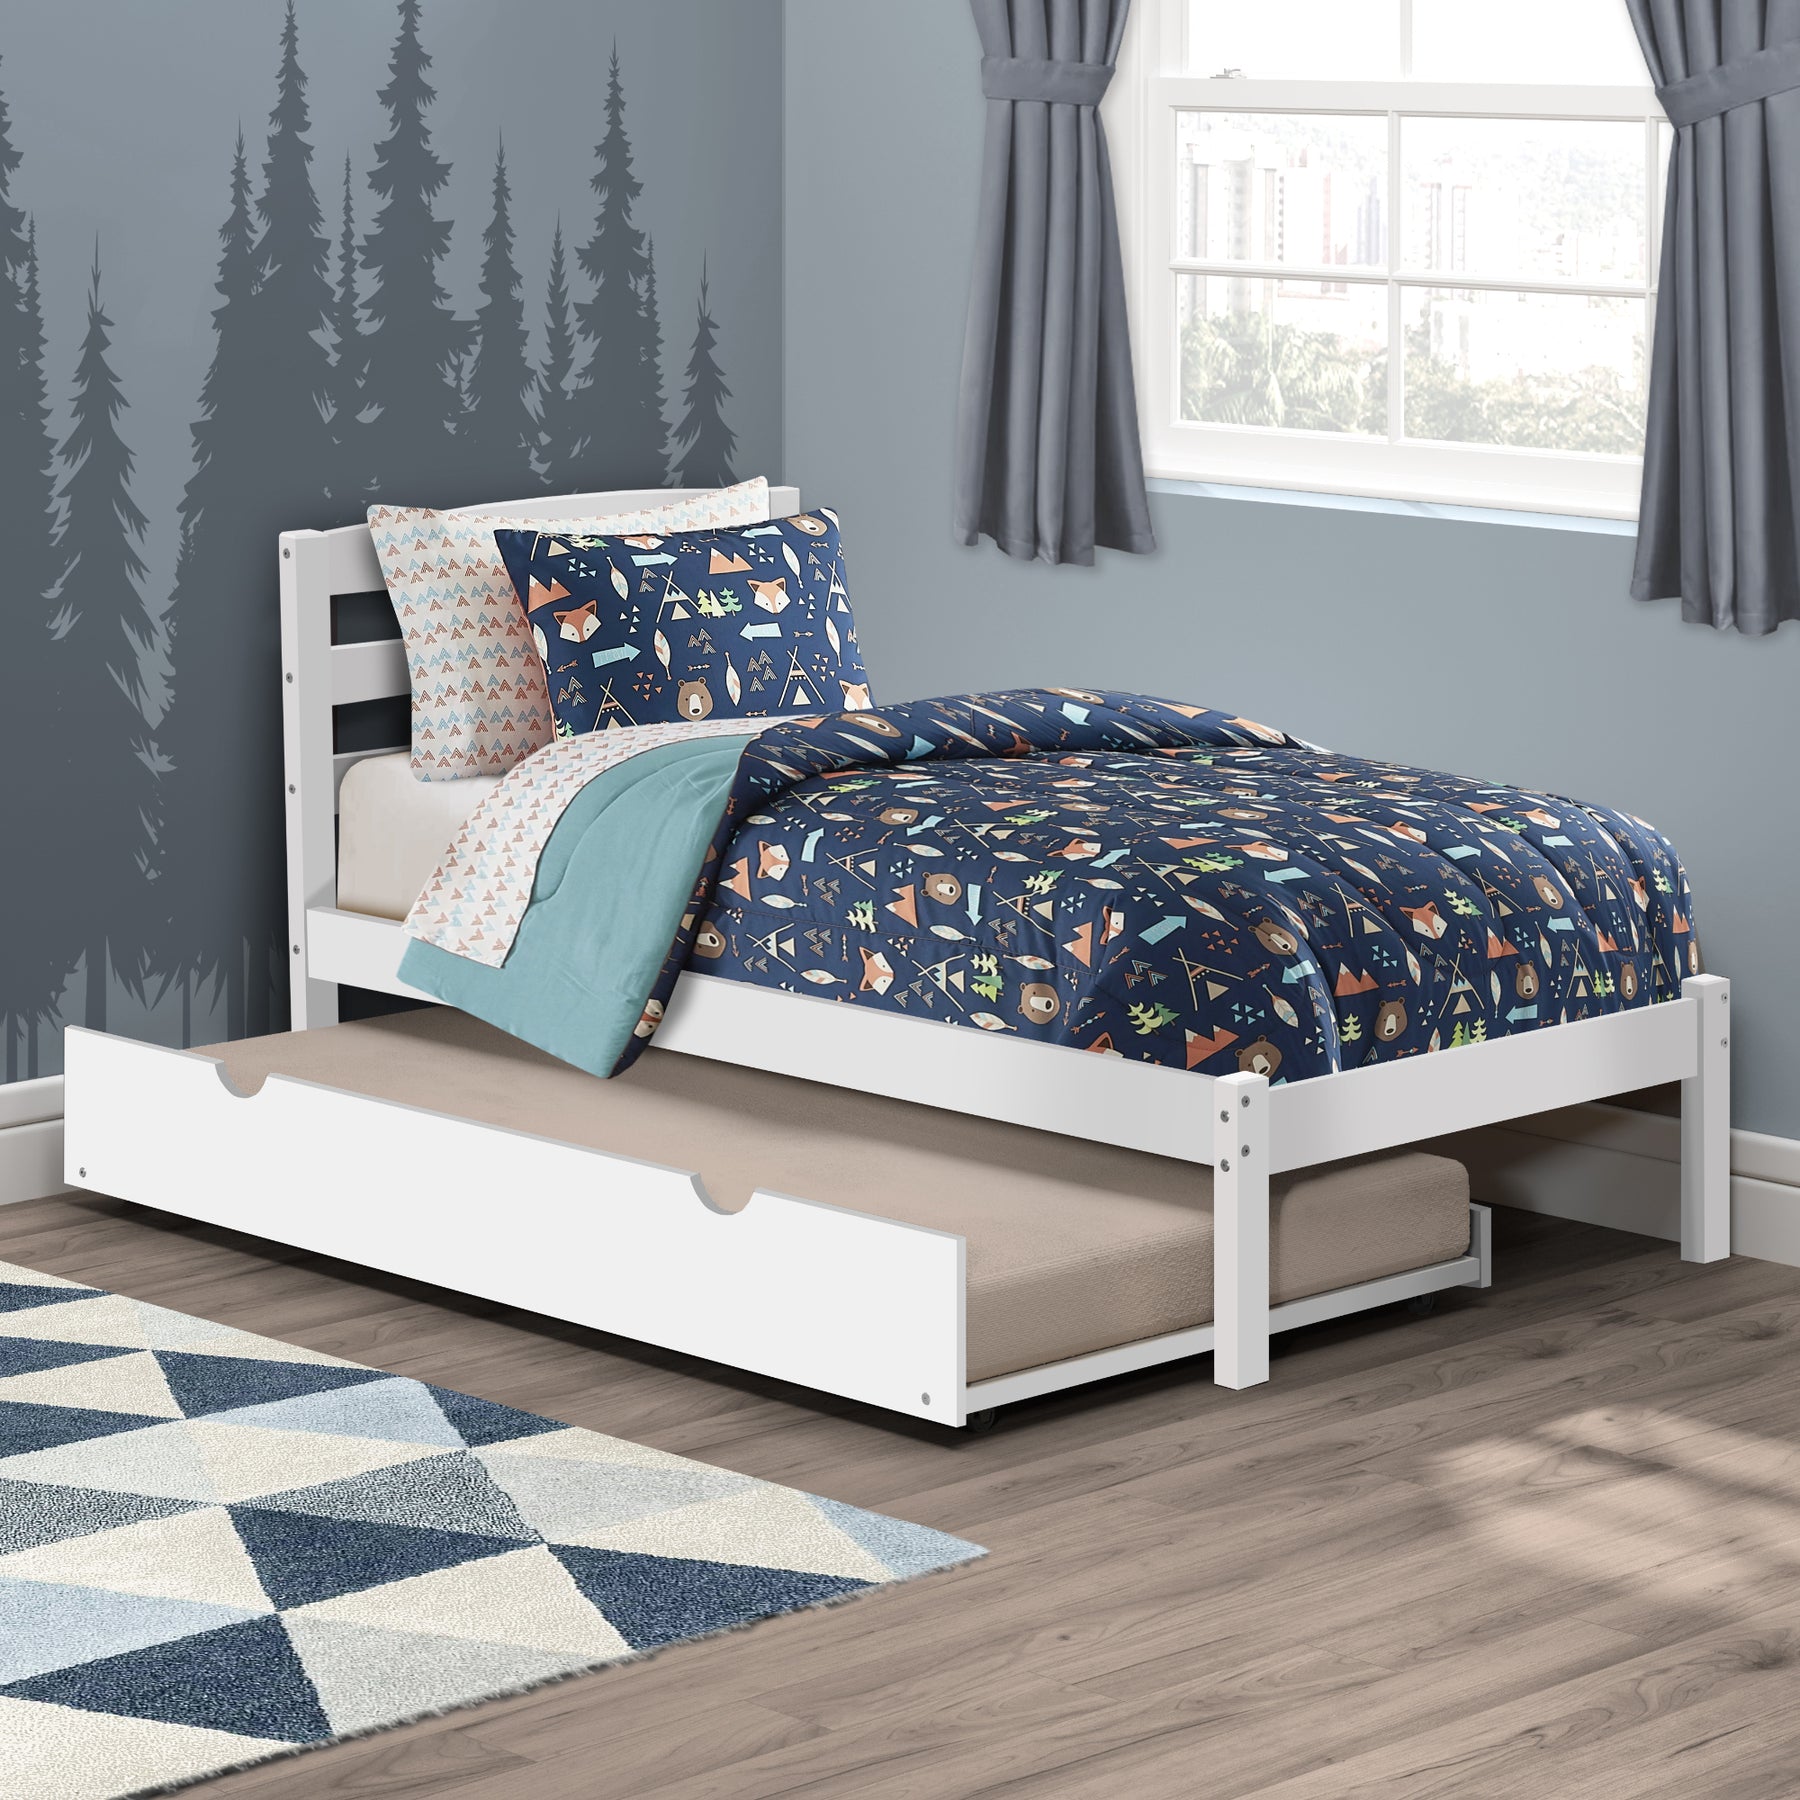 P'kolino Twin Bed with Trundle - White - Eco Friendly - Modern Design - PKFFBRTBTRWHT